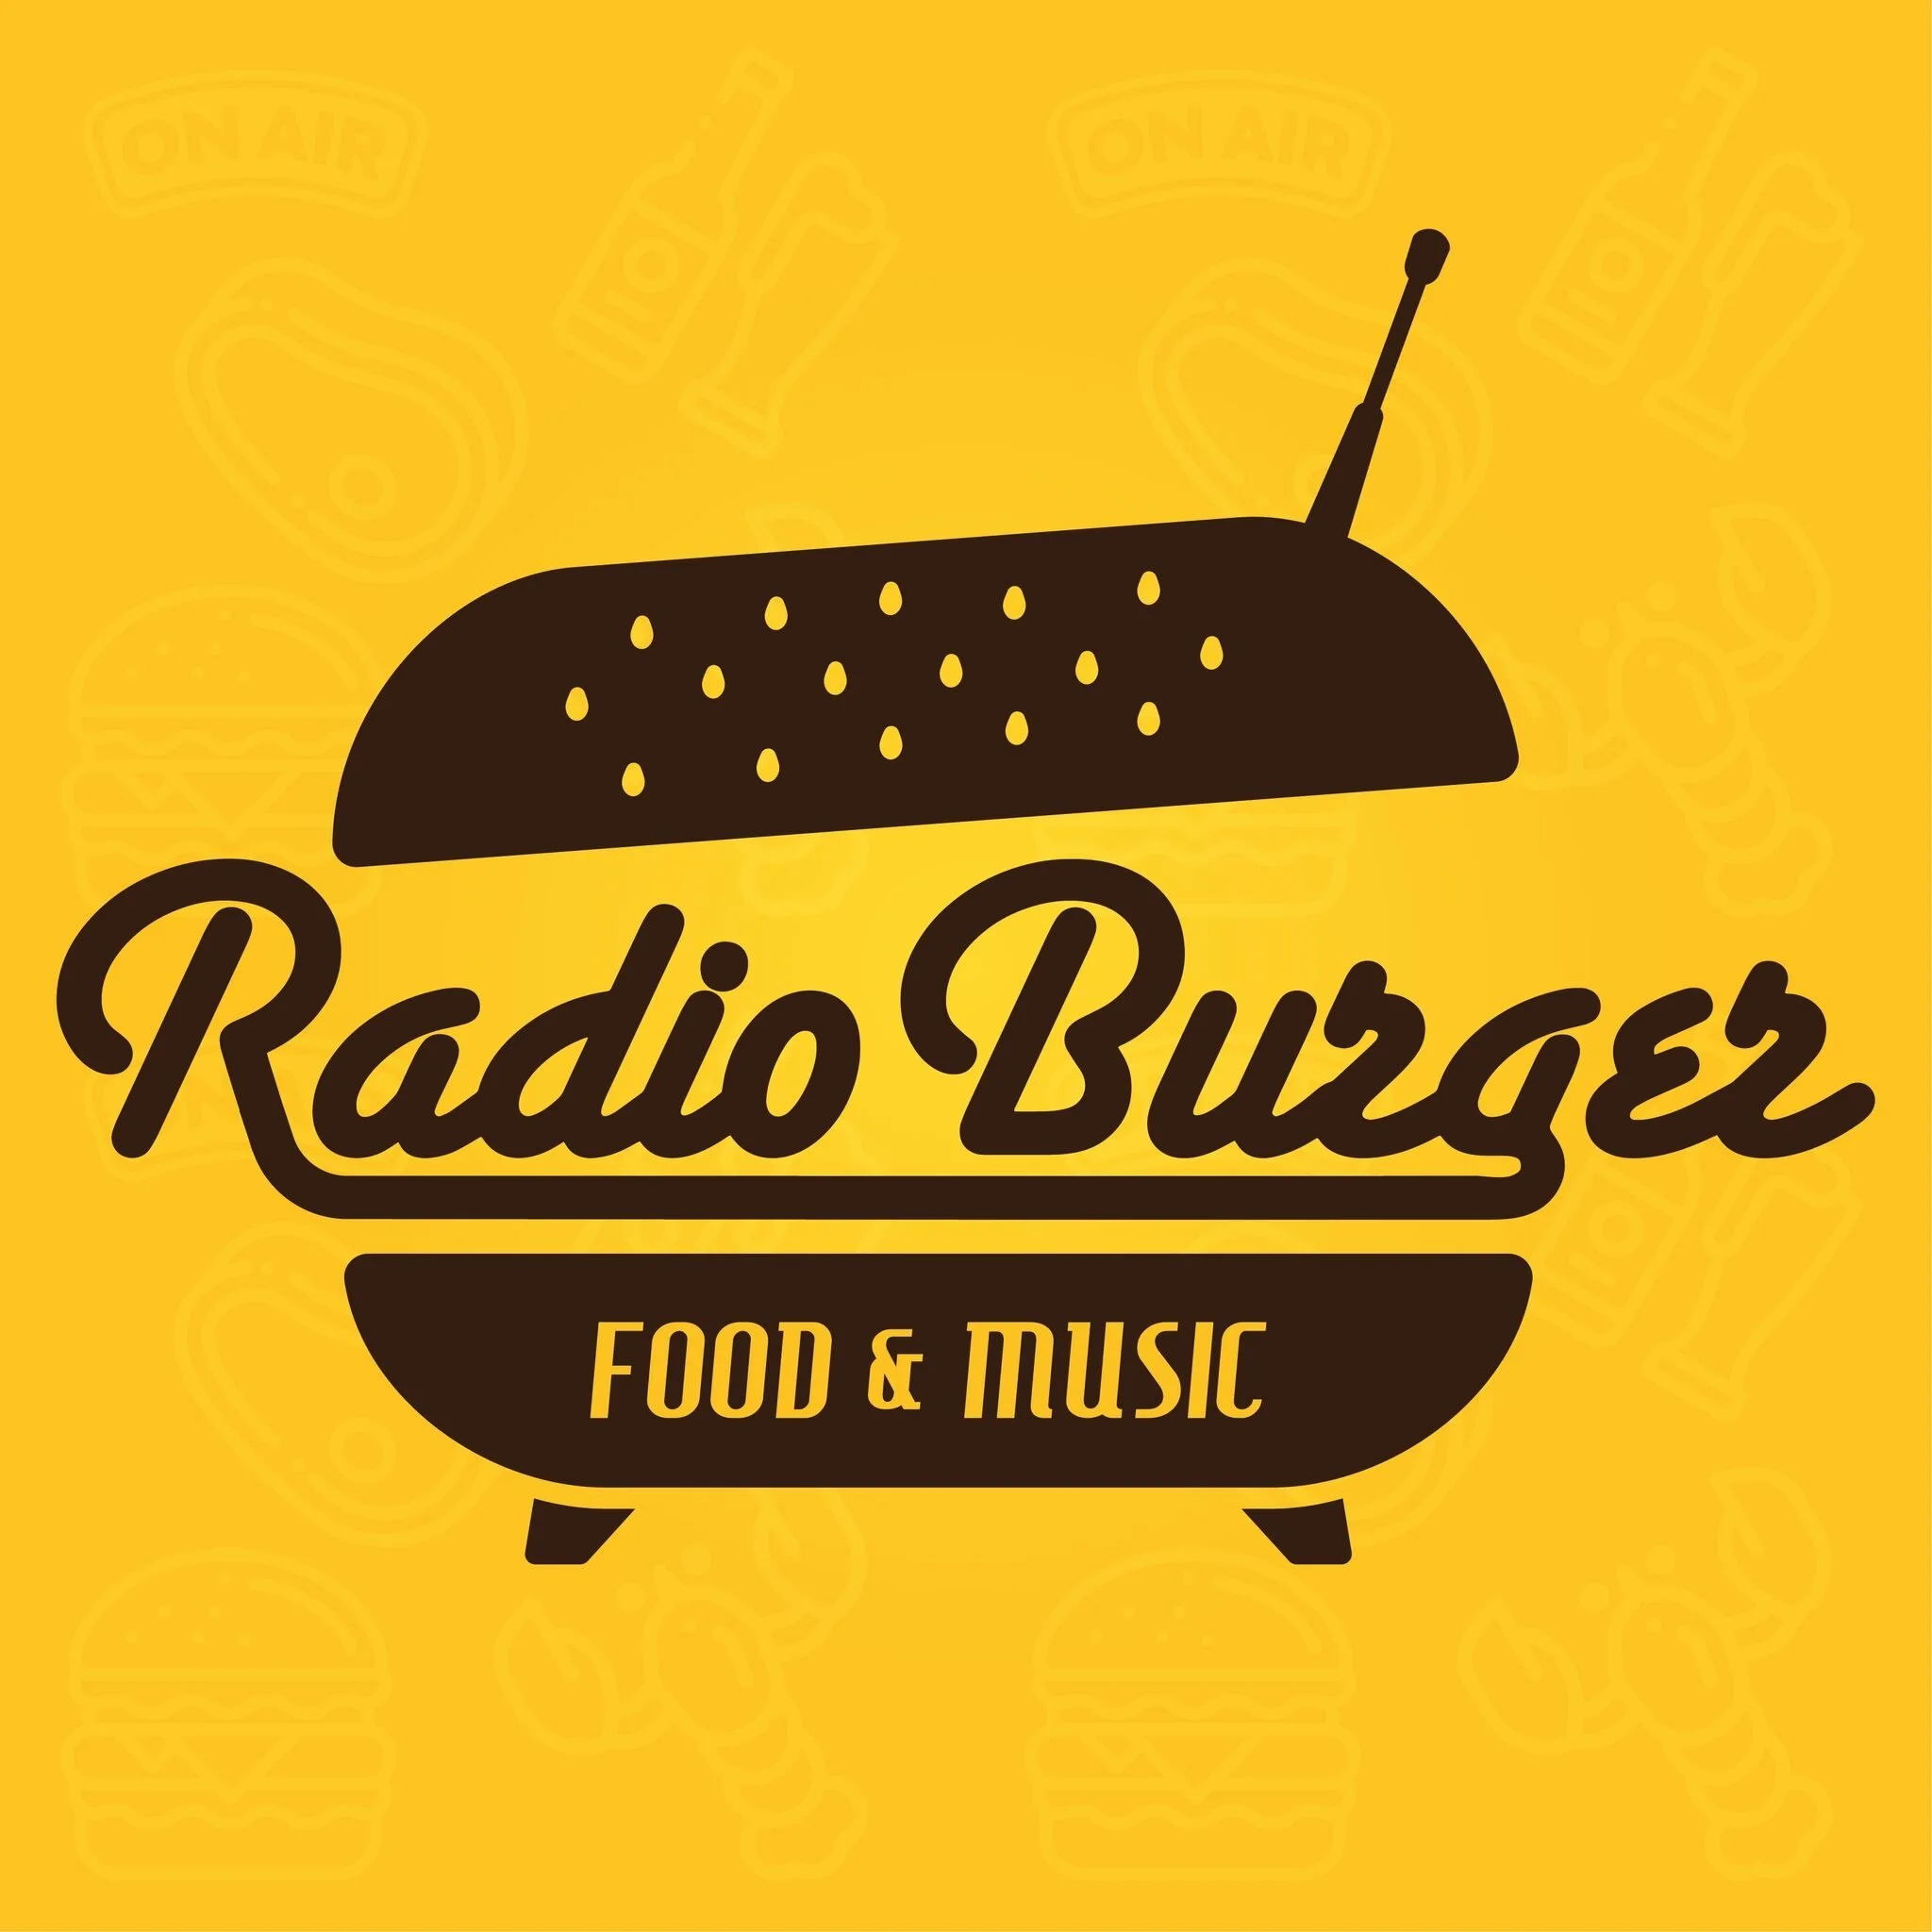 Restaurante-radio-burger-26207